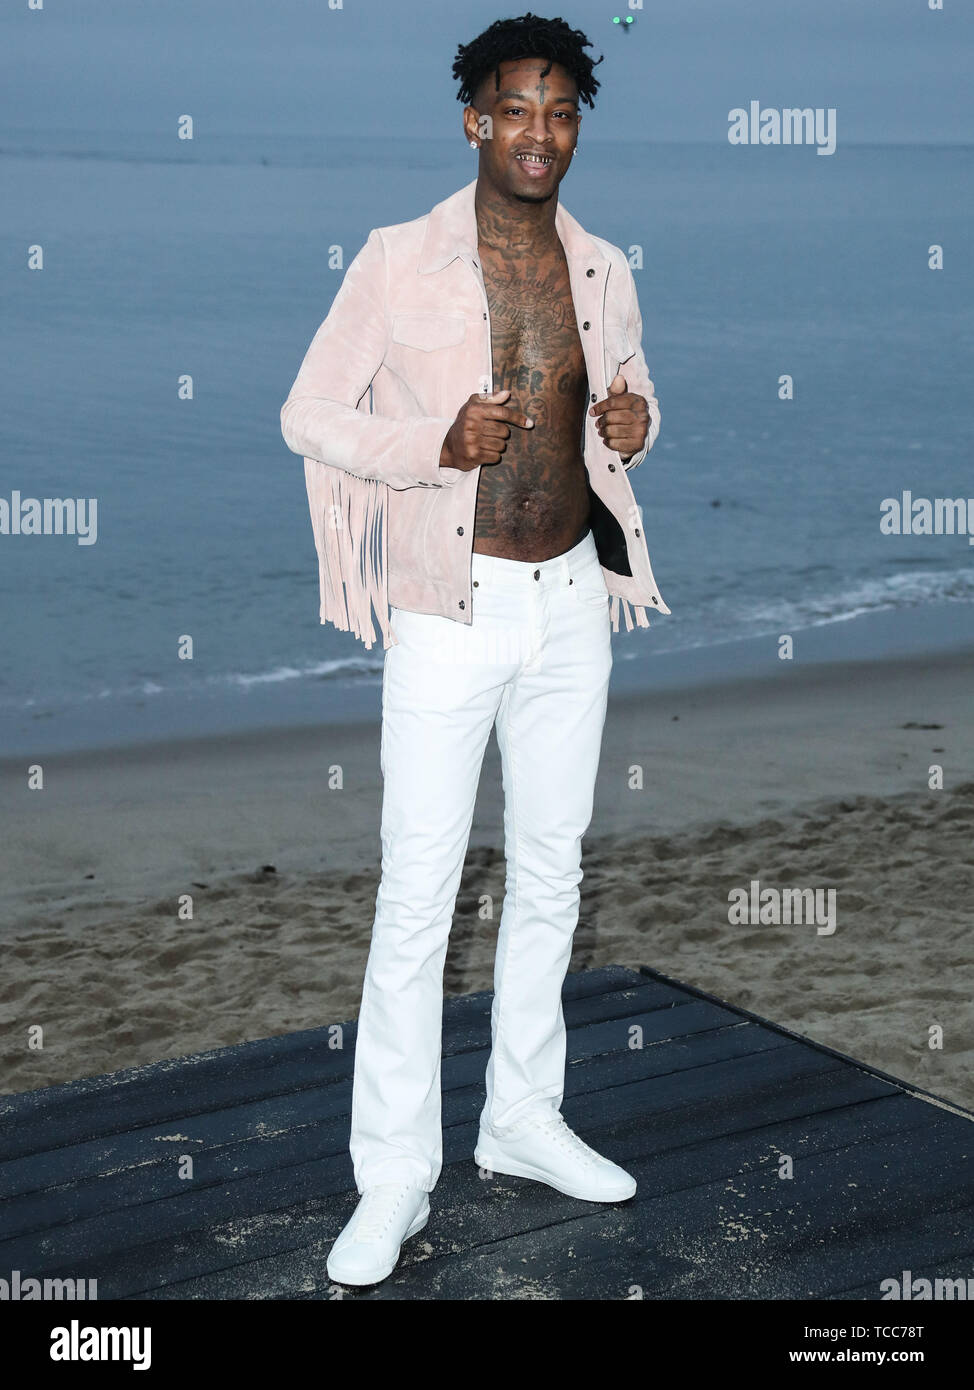 Malibu, United States. 06th June, 2019. MALIBU, LOS ANGELES, CALIFORNIA,  USA - JUNE 06: Rapper 21 Savage arrives at the Saint Laurent Mens Spring  Summer 20 Show held at Paradise Cove Beach